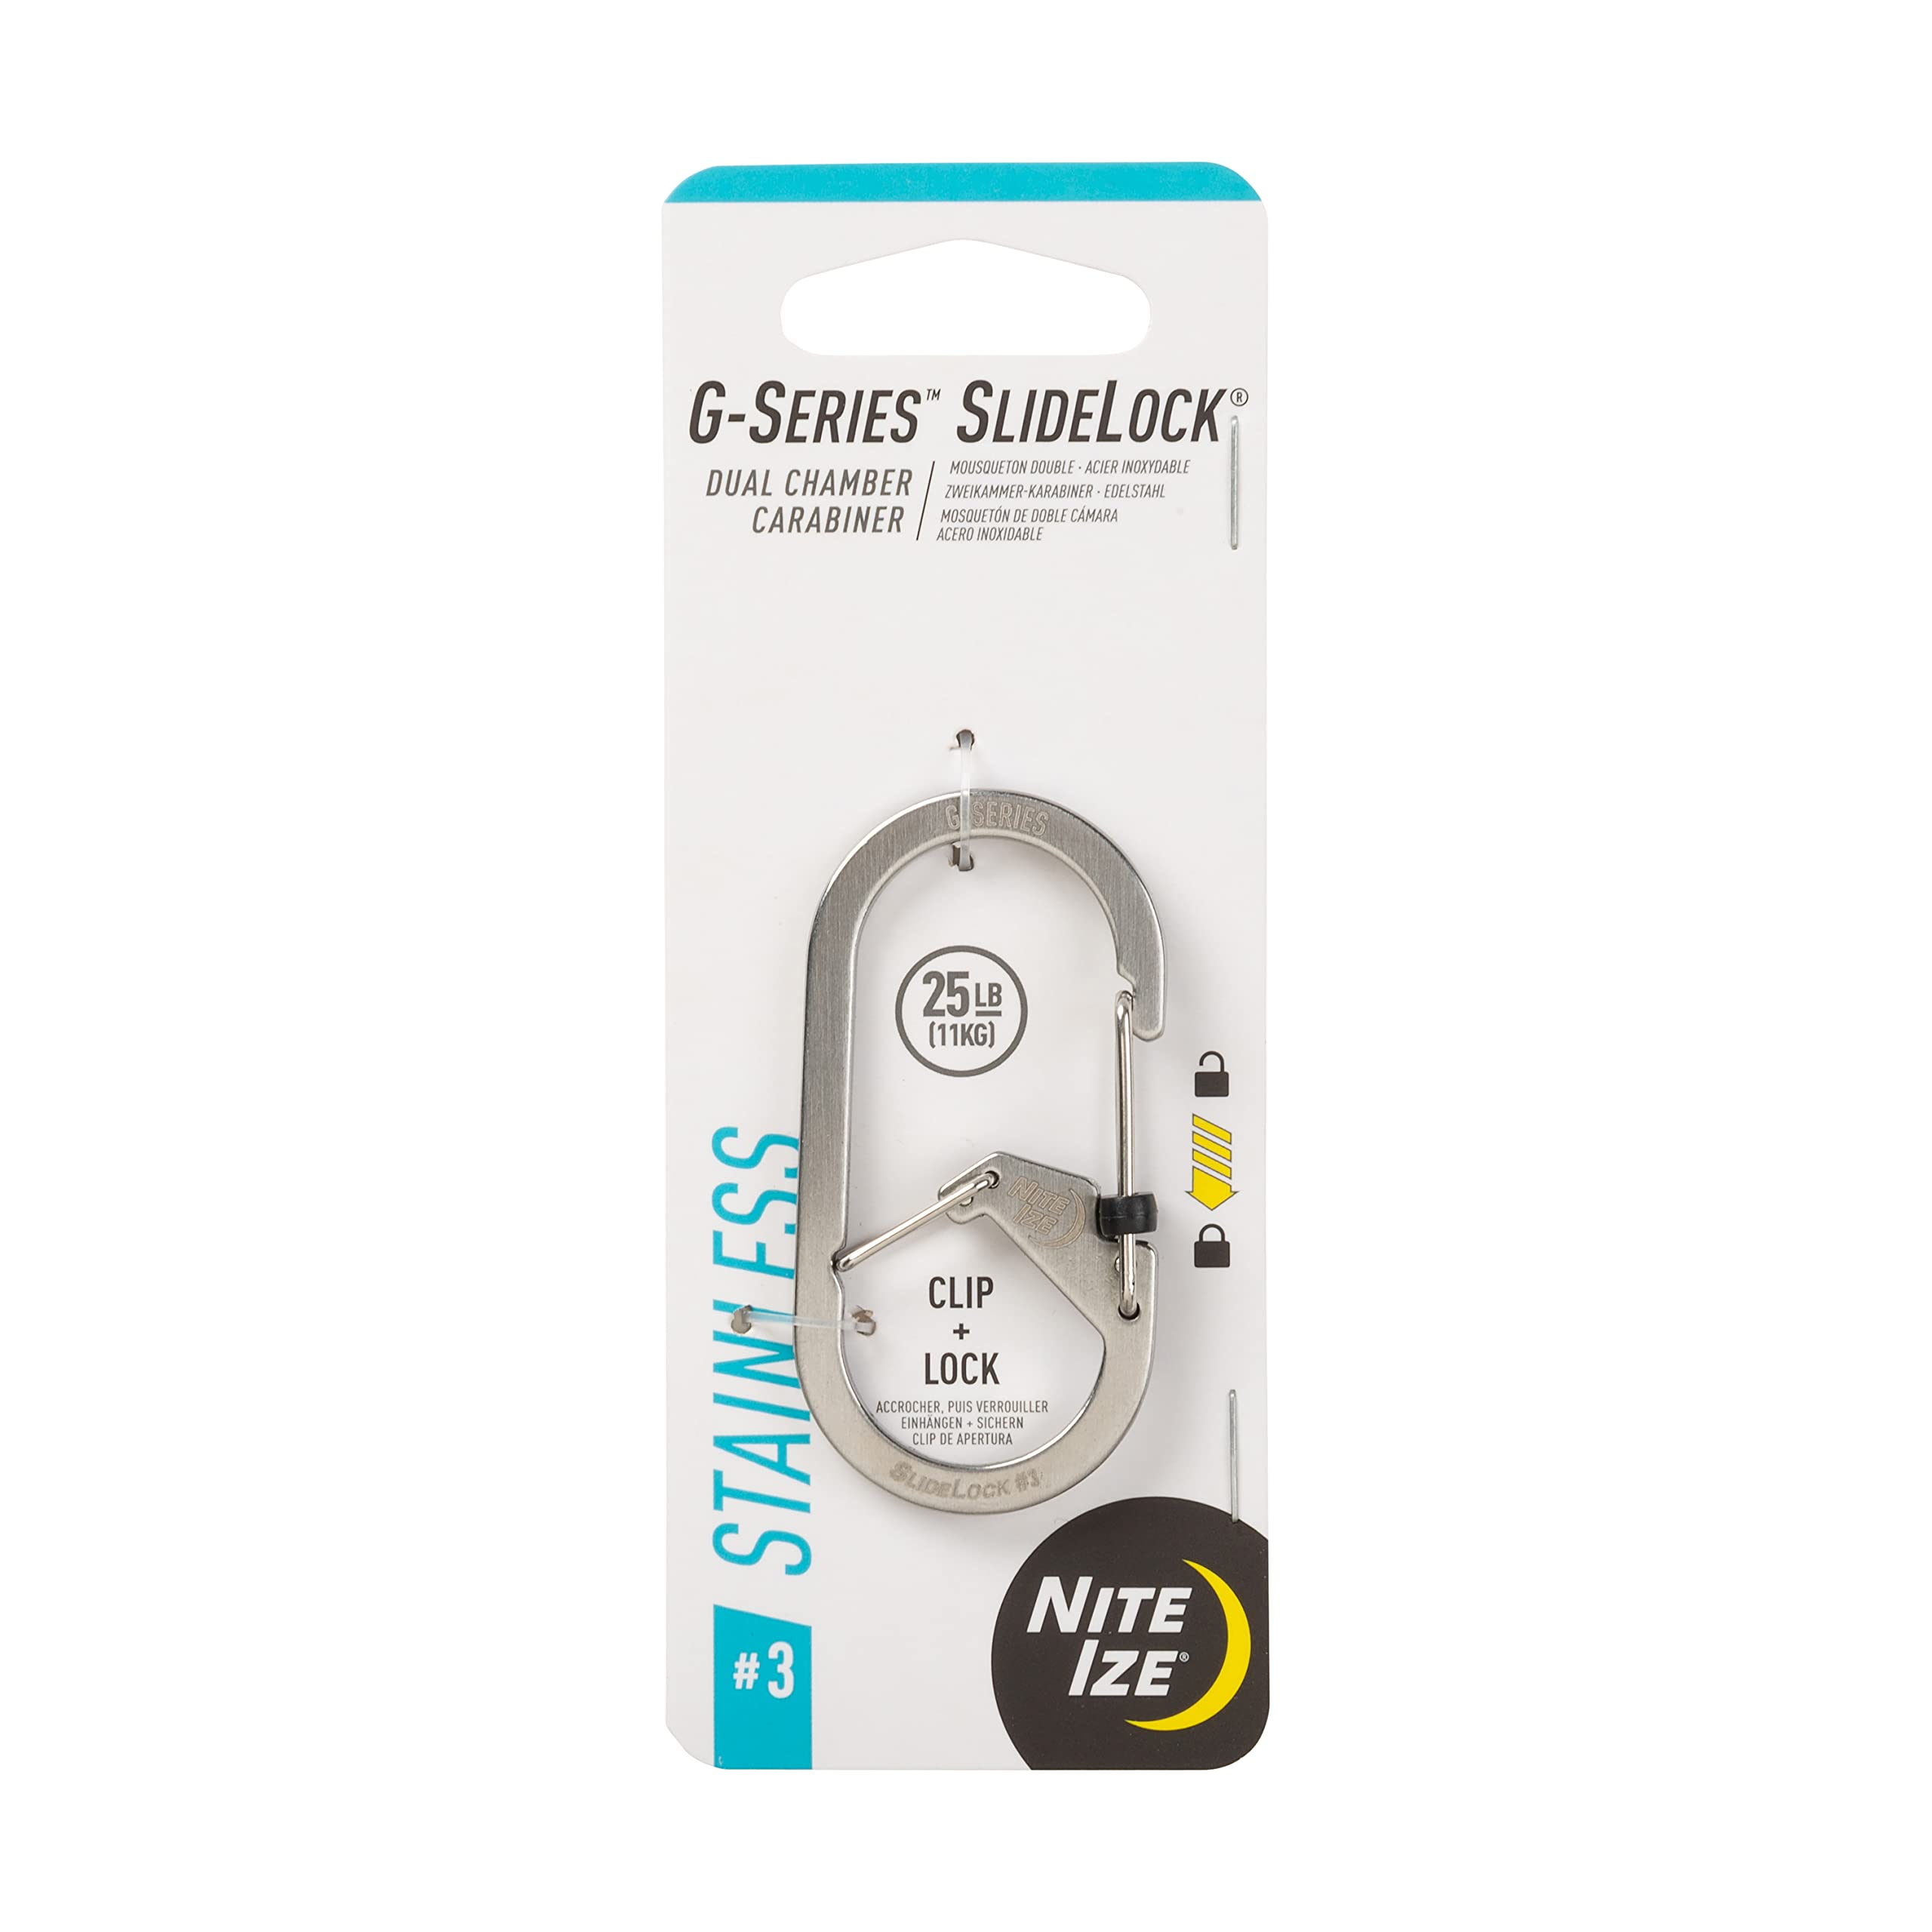 Nite Ize G-Series SlideLock #3 Dual Chamber Carabiner, Dual Security Carabiner Keychain, Stainless Steel